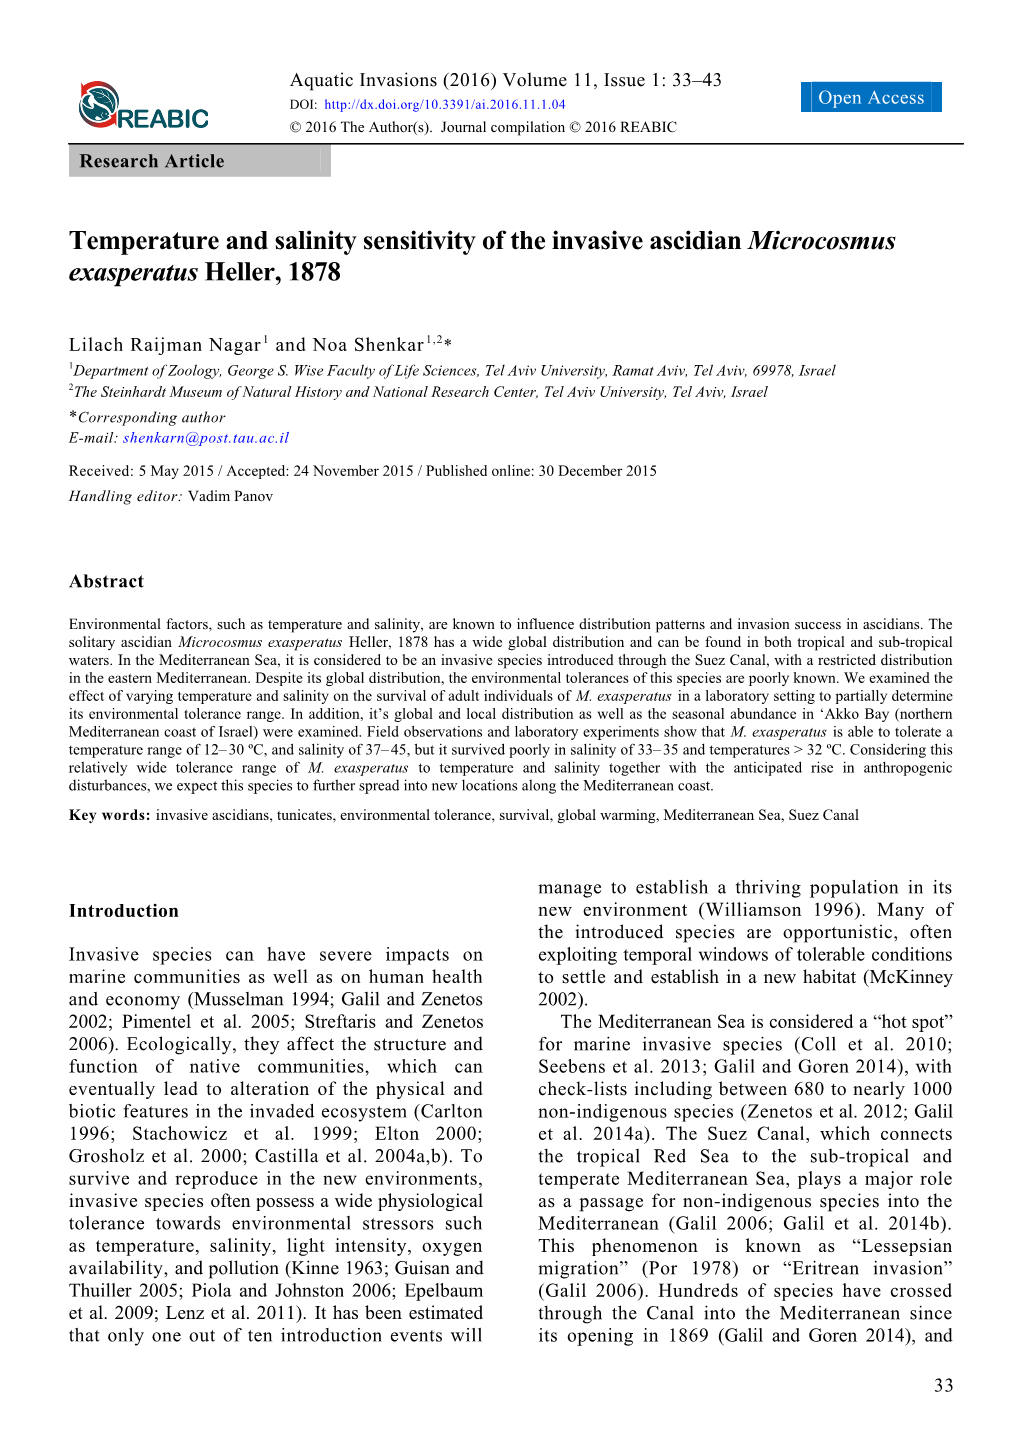 Temperature and Salinity Sensitivity of the Invasive Ascidian Microcosmus Exasperatus Heller, 1878